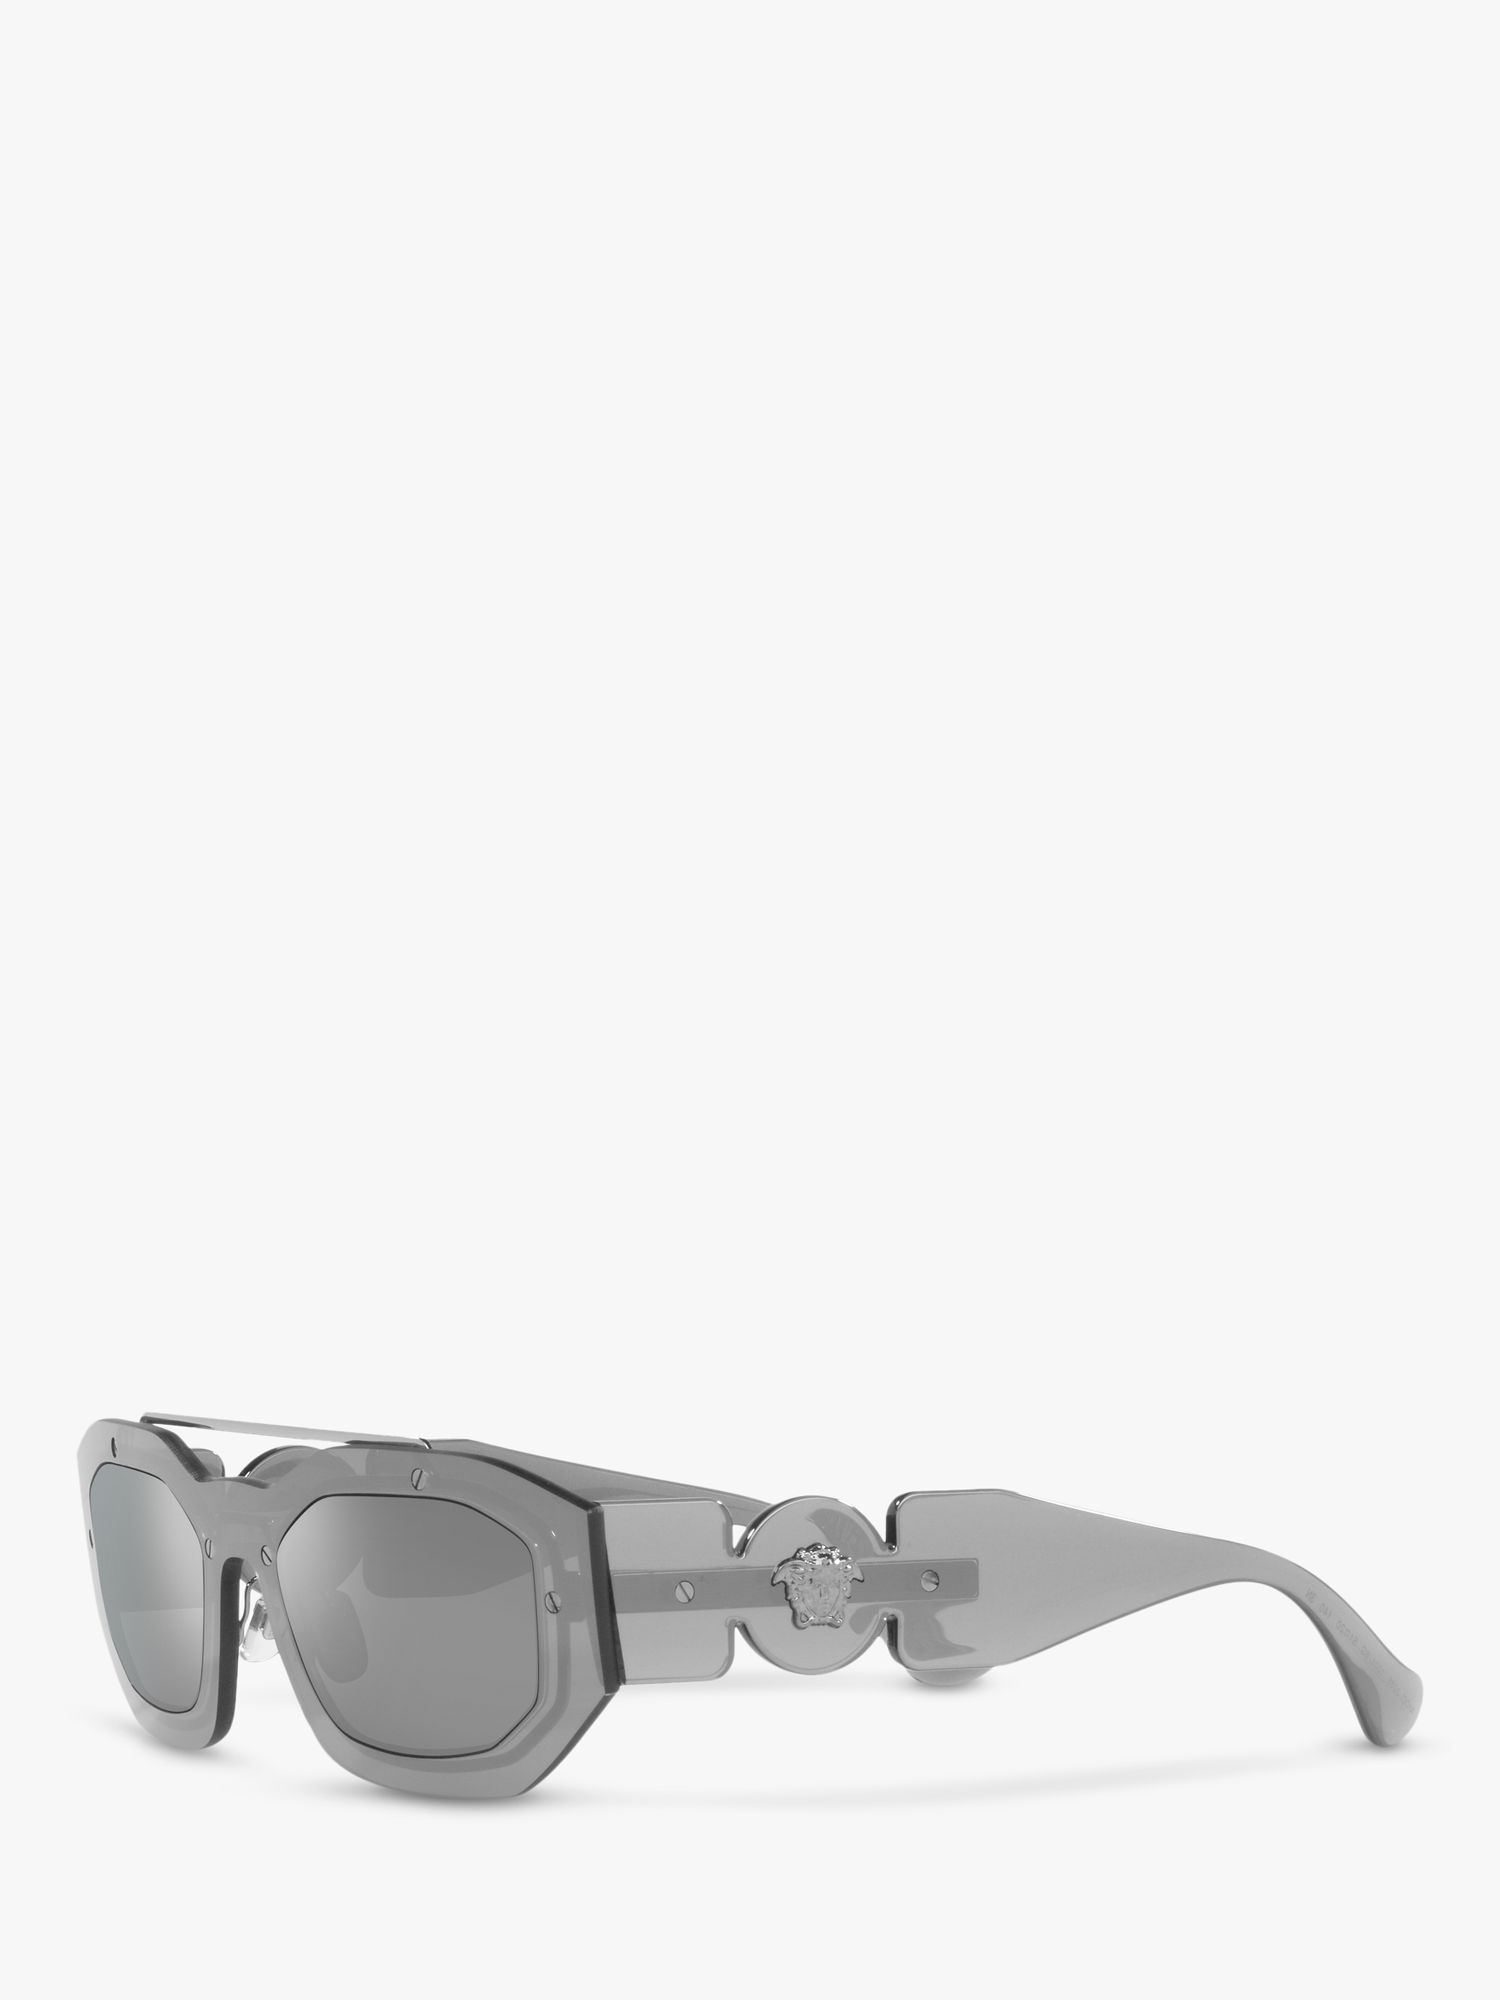 Versace VE2235 Men's Irregular Sunglasses, Transparent Grey/Mirror Silver